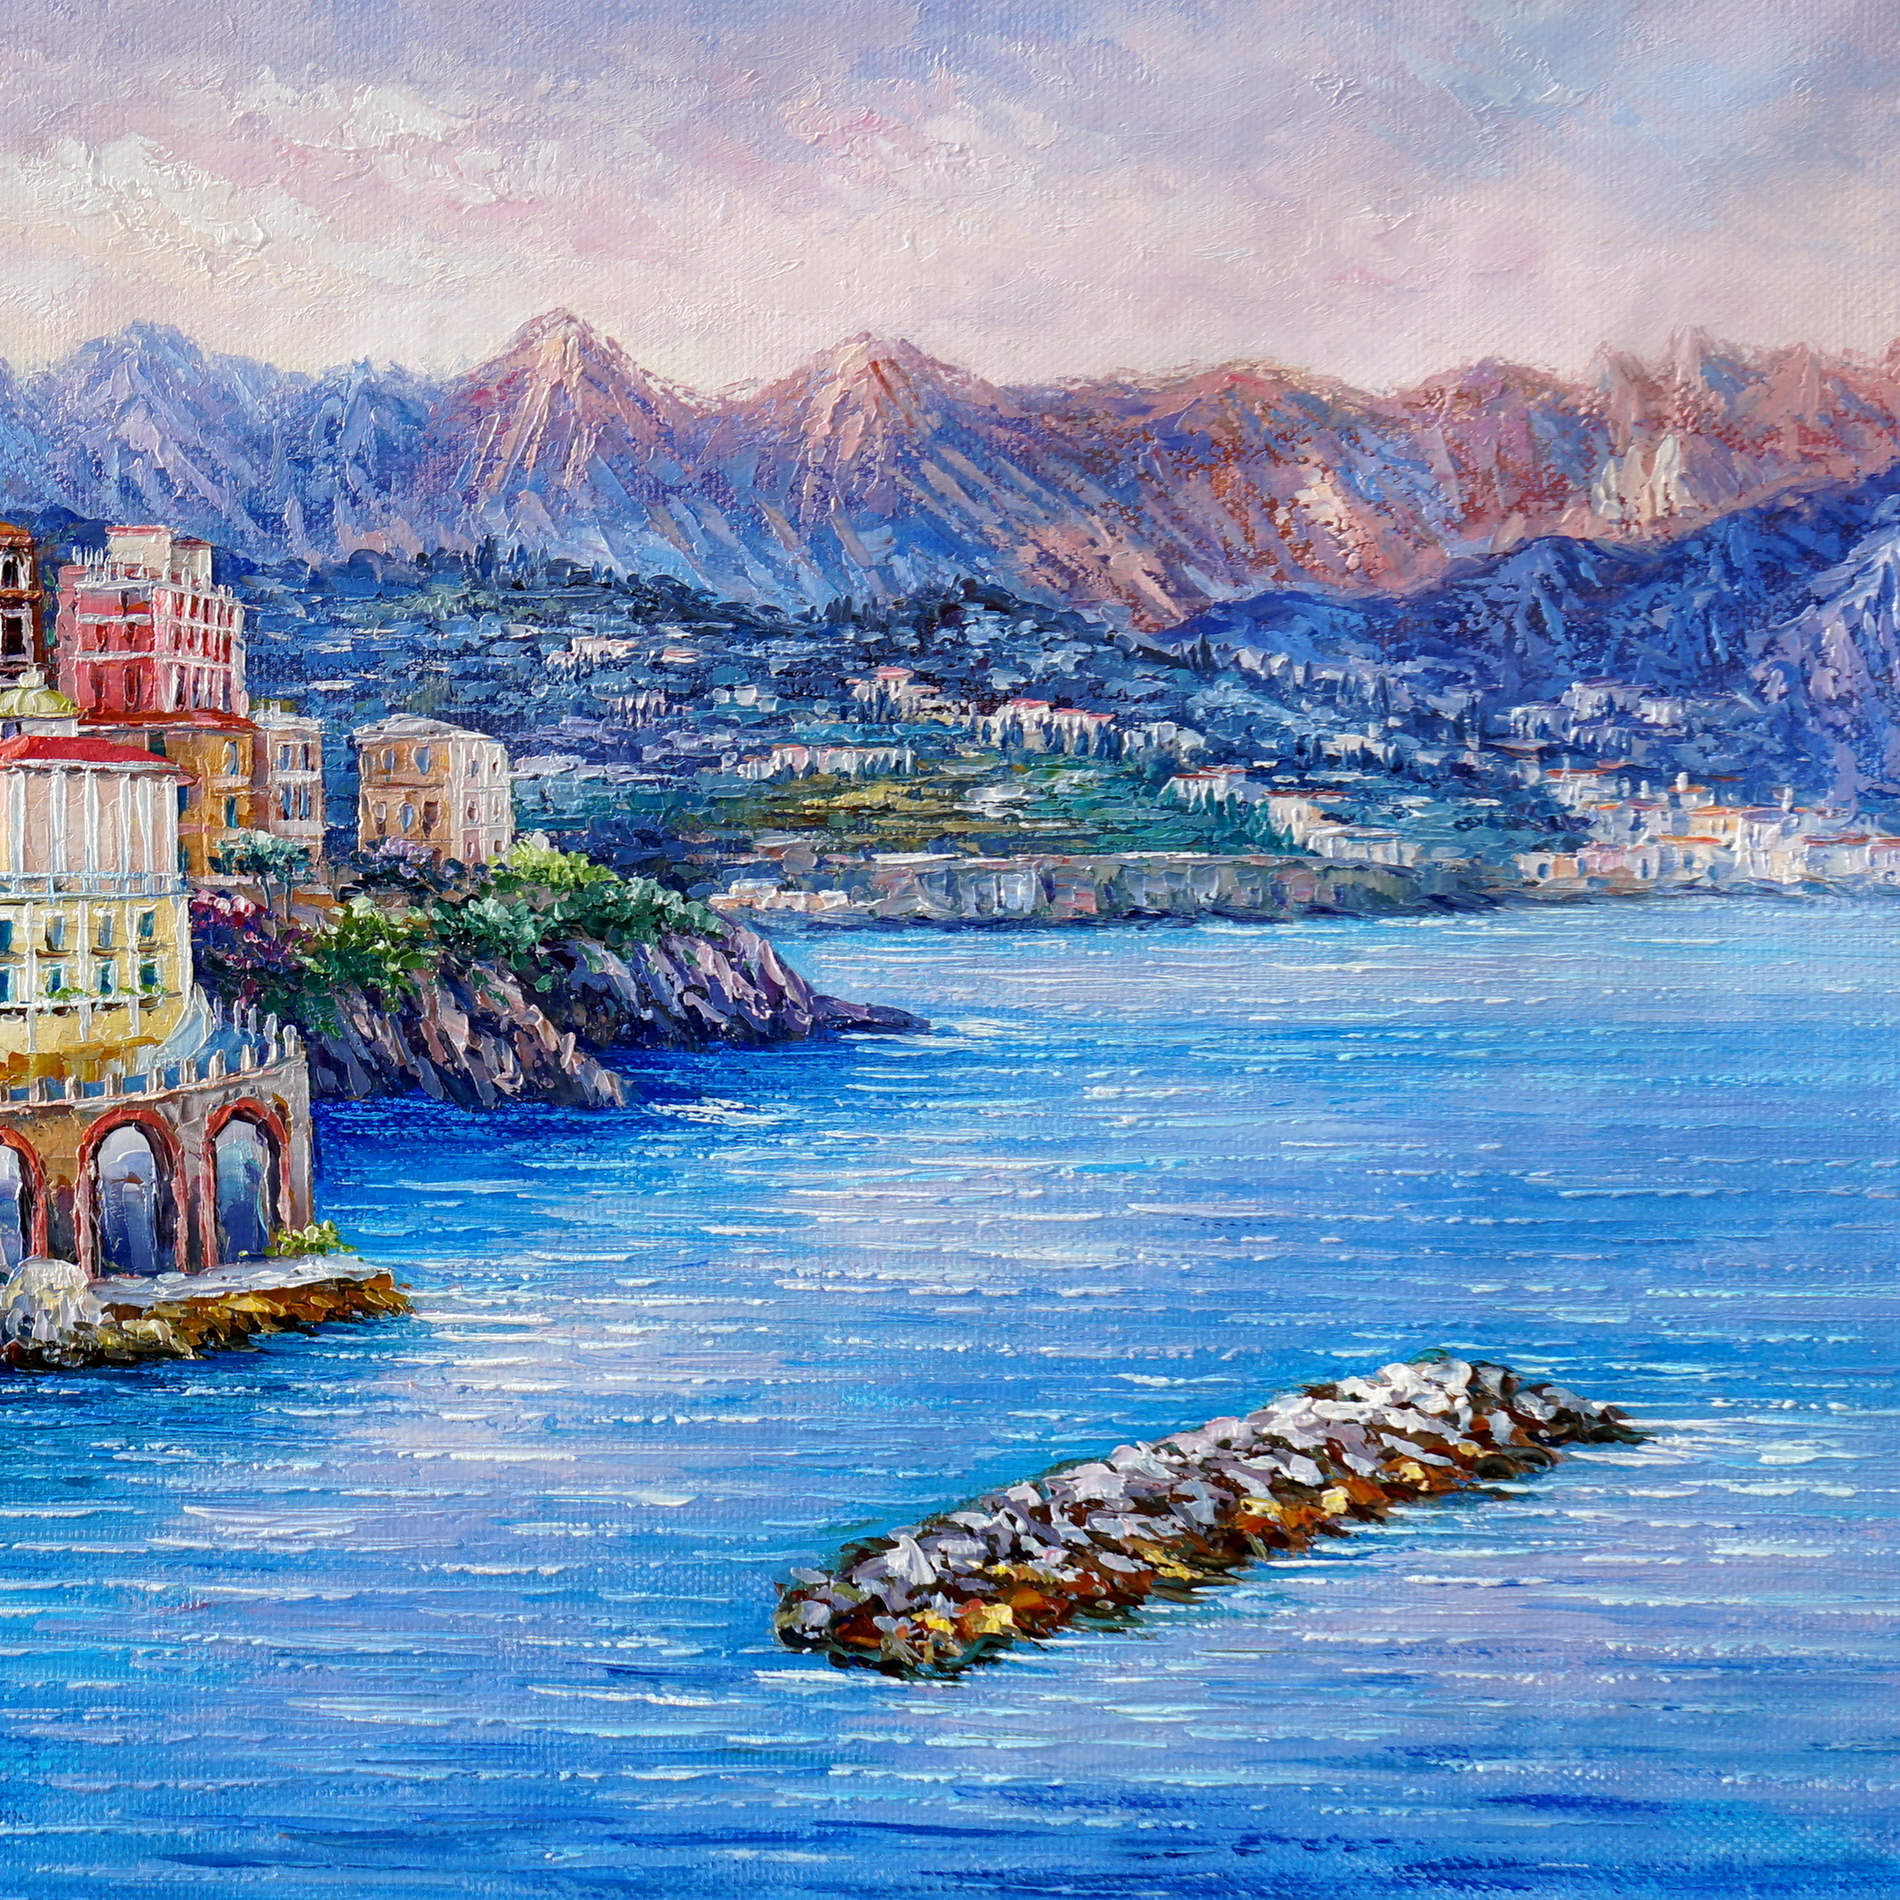 Hand painted Atrani coastal landscape 60x120cm